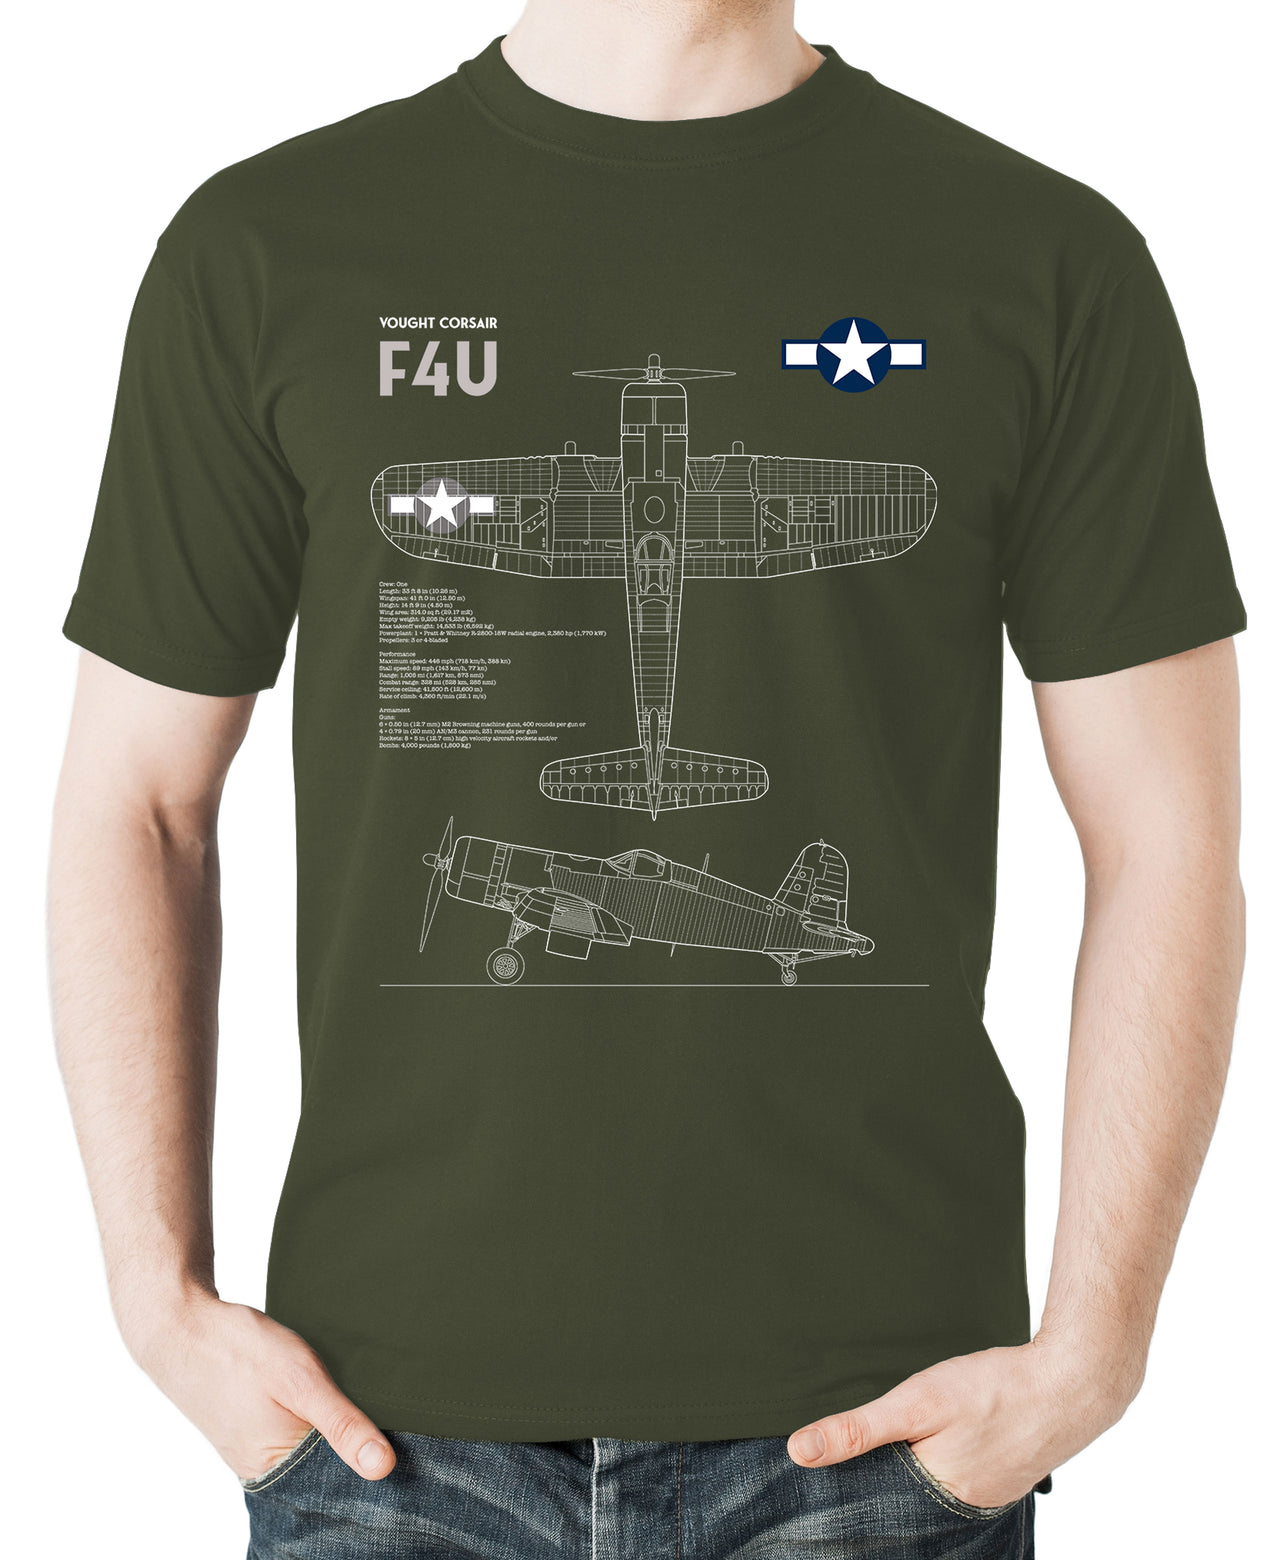 F4U Corsair - T-shirt